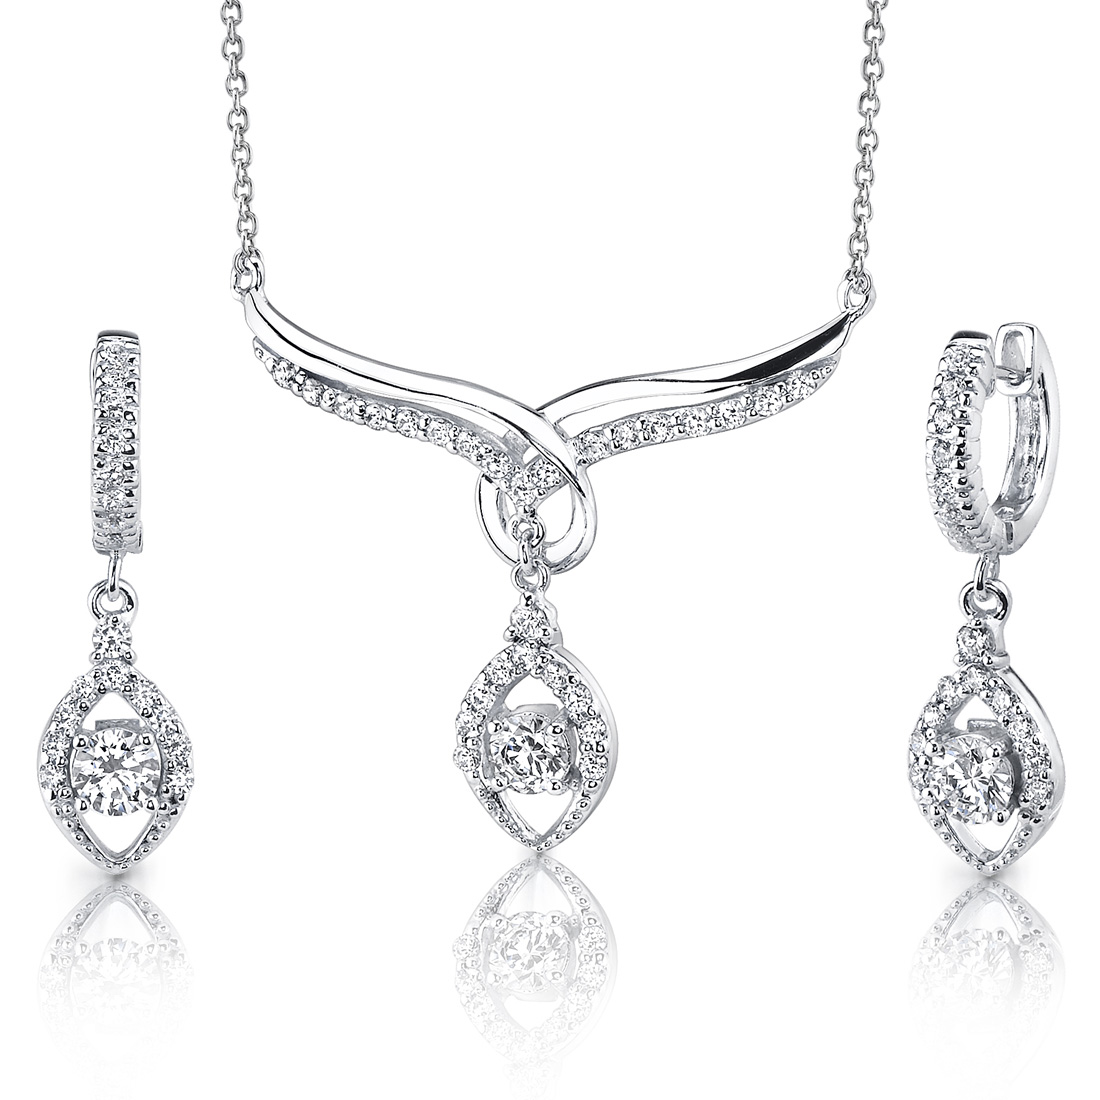  Bridal Teardrop Necklace Earrings Set with Cubic Zirconia